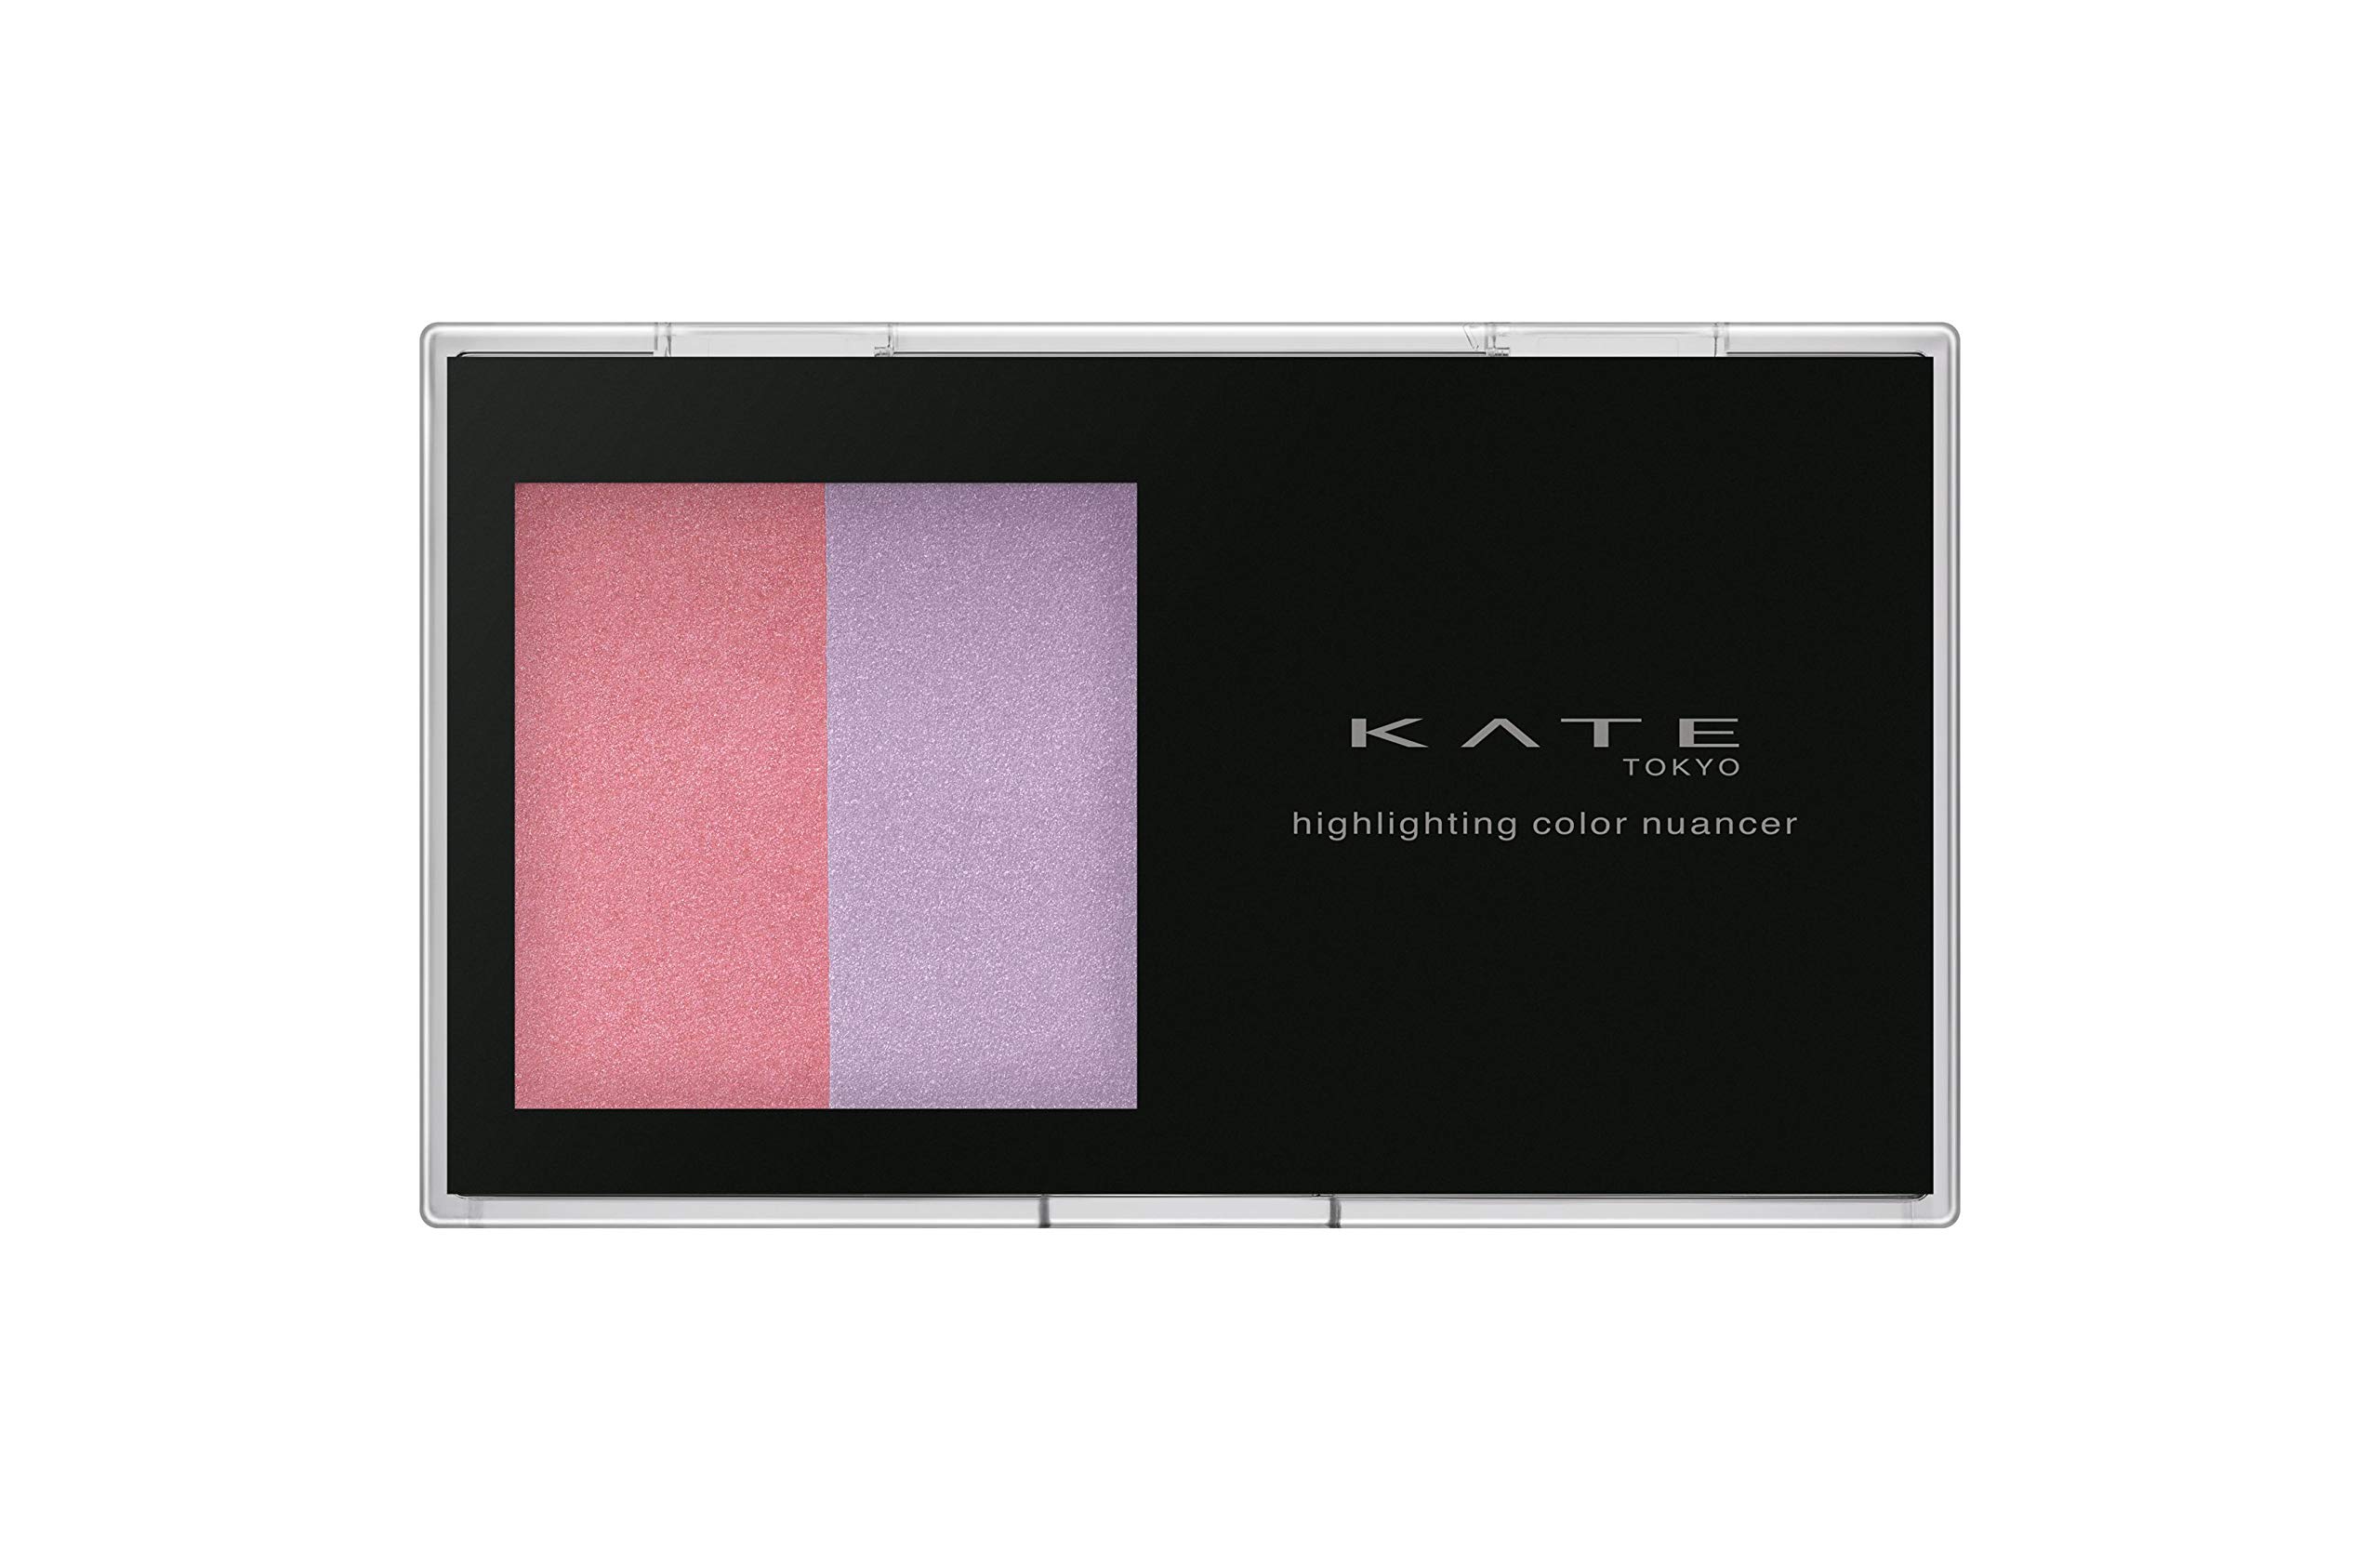 KATE(ケイト) ケイト ハイライティングカラーニュアンサー EX-1 チーク ピンク 4.5グラム (x 1)